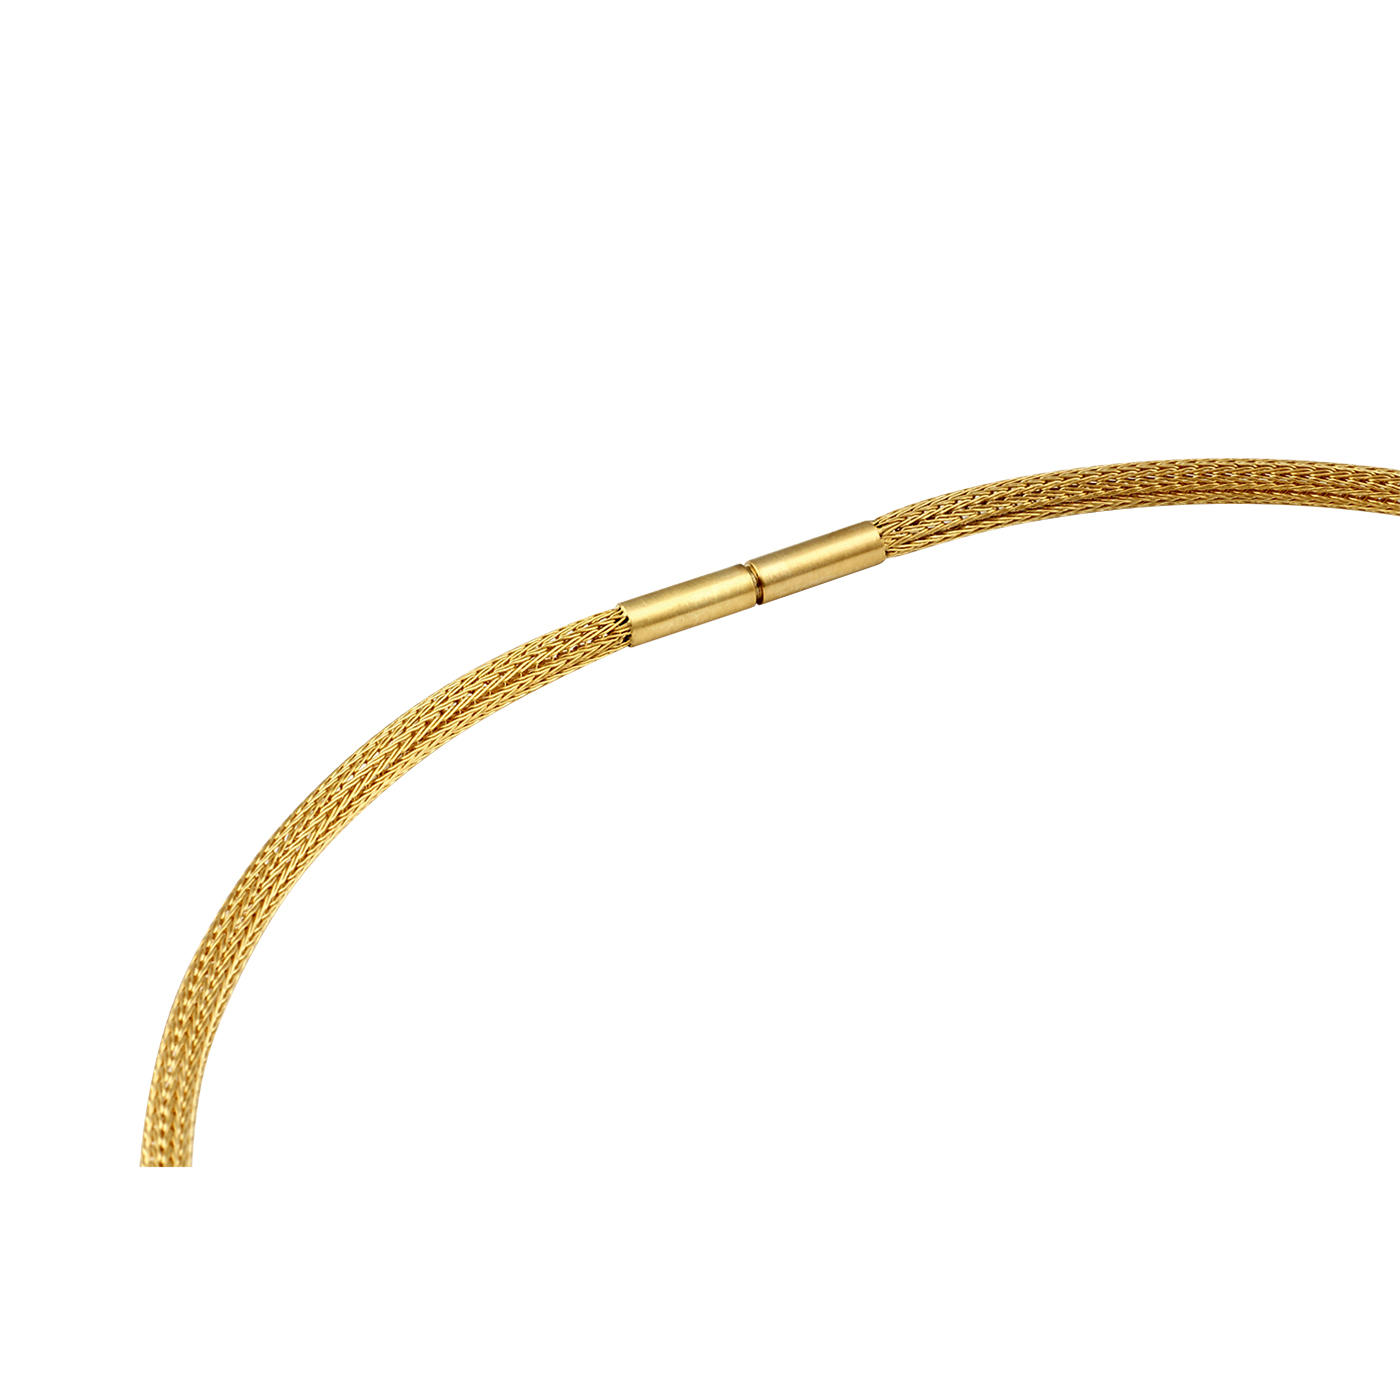 Halsreif "Calza", ES vergoldet, ø 2,5 mm, 40 cm, Bajonett - 1 Stück